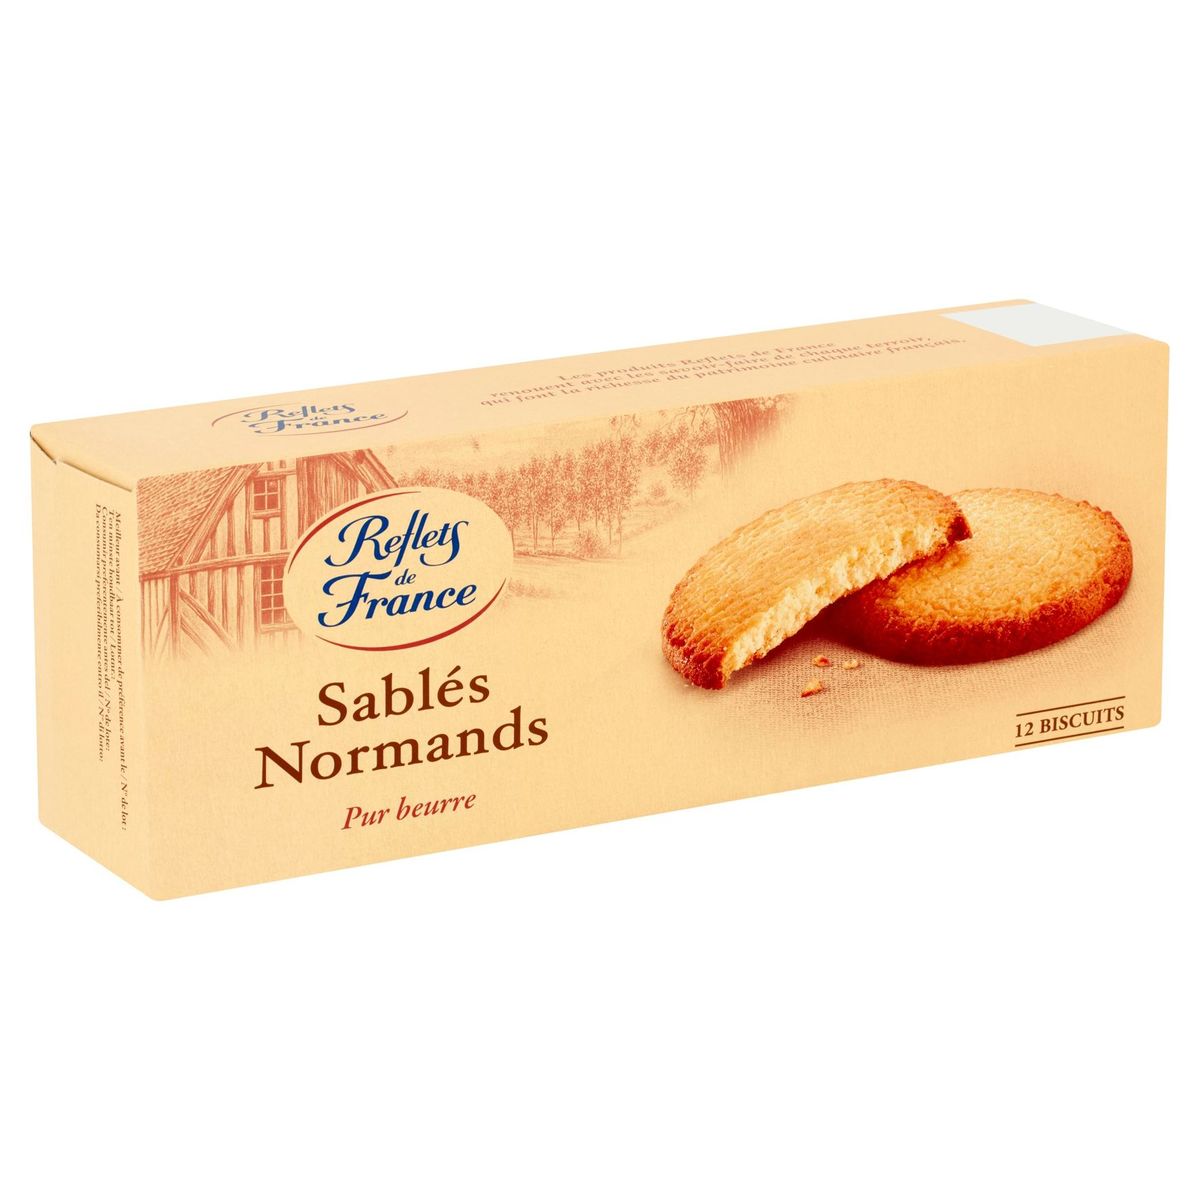 Reflets de France Sablés Normands 12 Biscuits 175 g